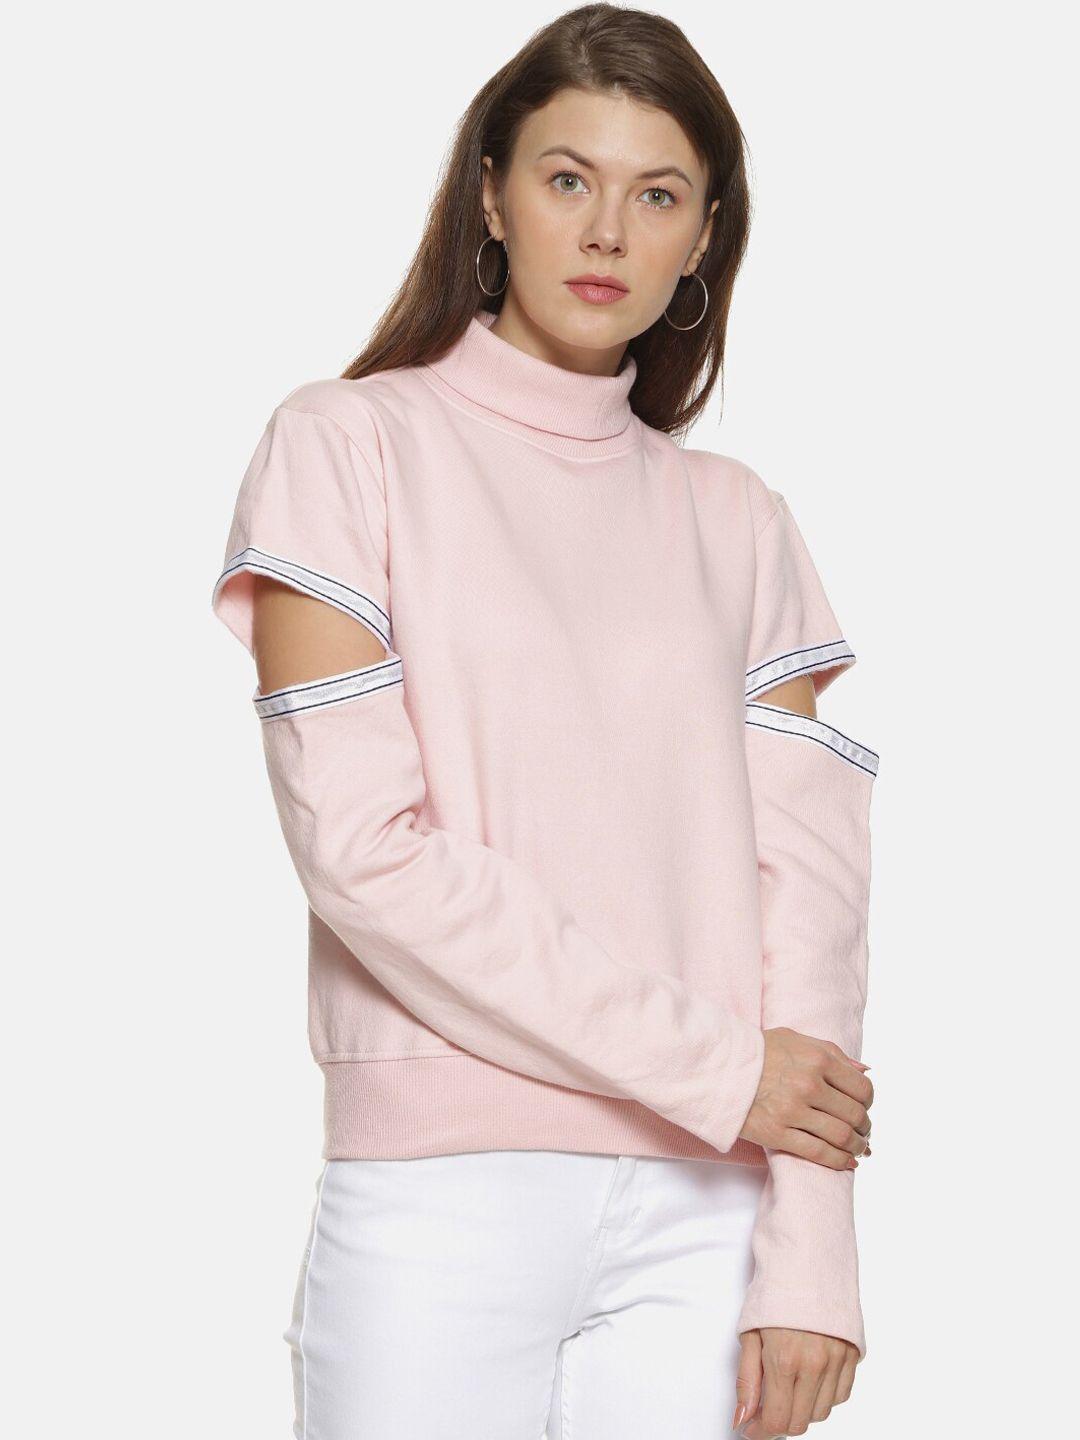 campus-sutra-women-pink-solid-sleeve-cut-sweatshirt